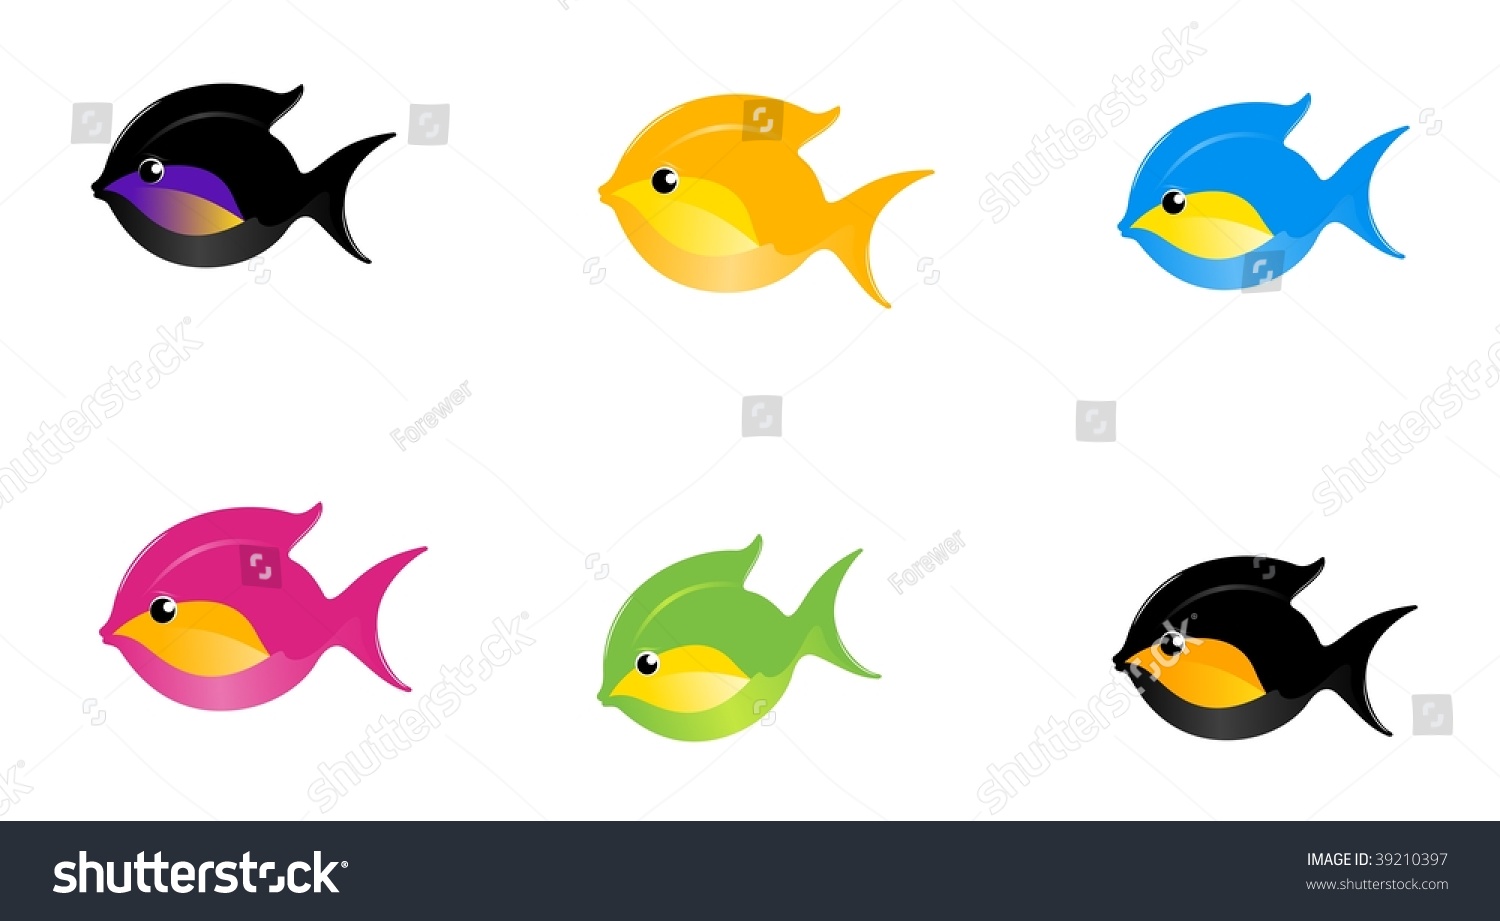 6 Cartoon Fish A White Background Stock Vector Illustration 39210397